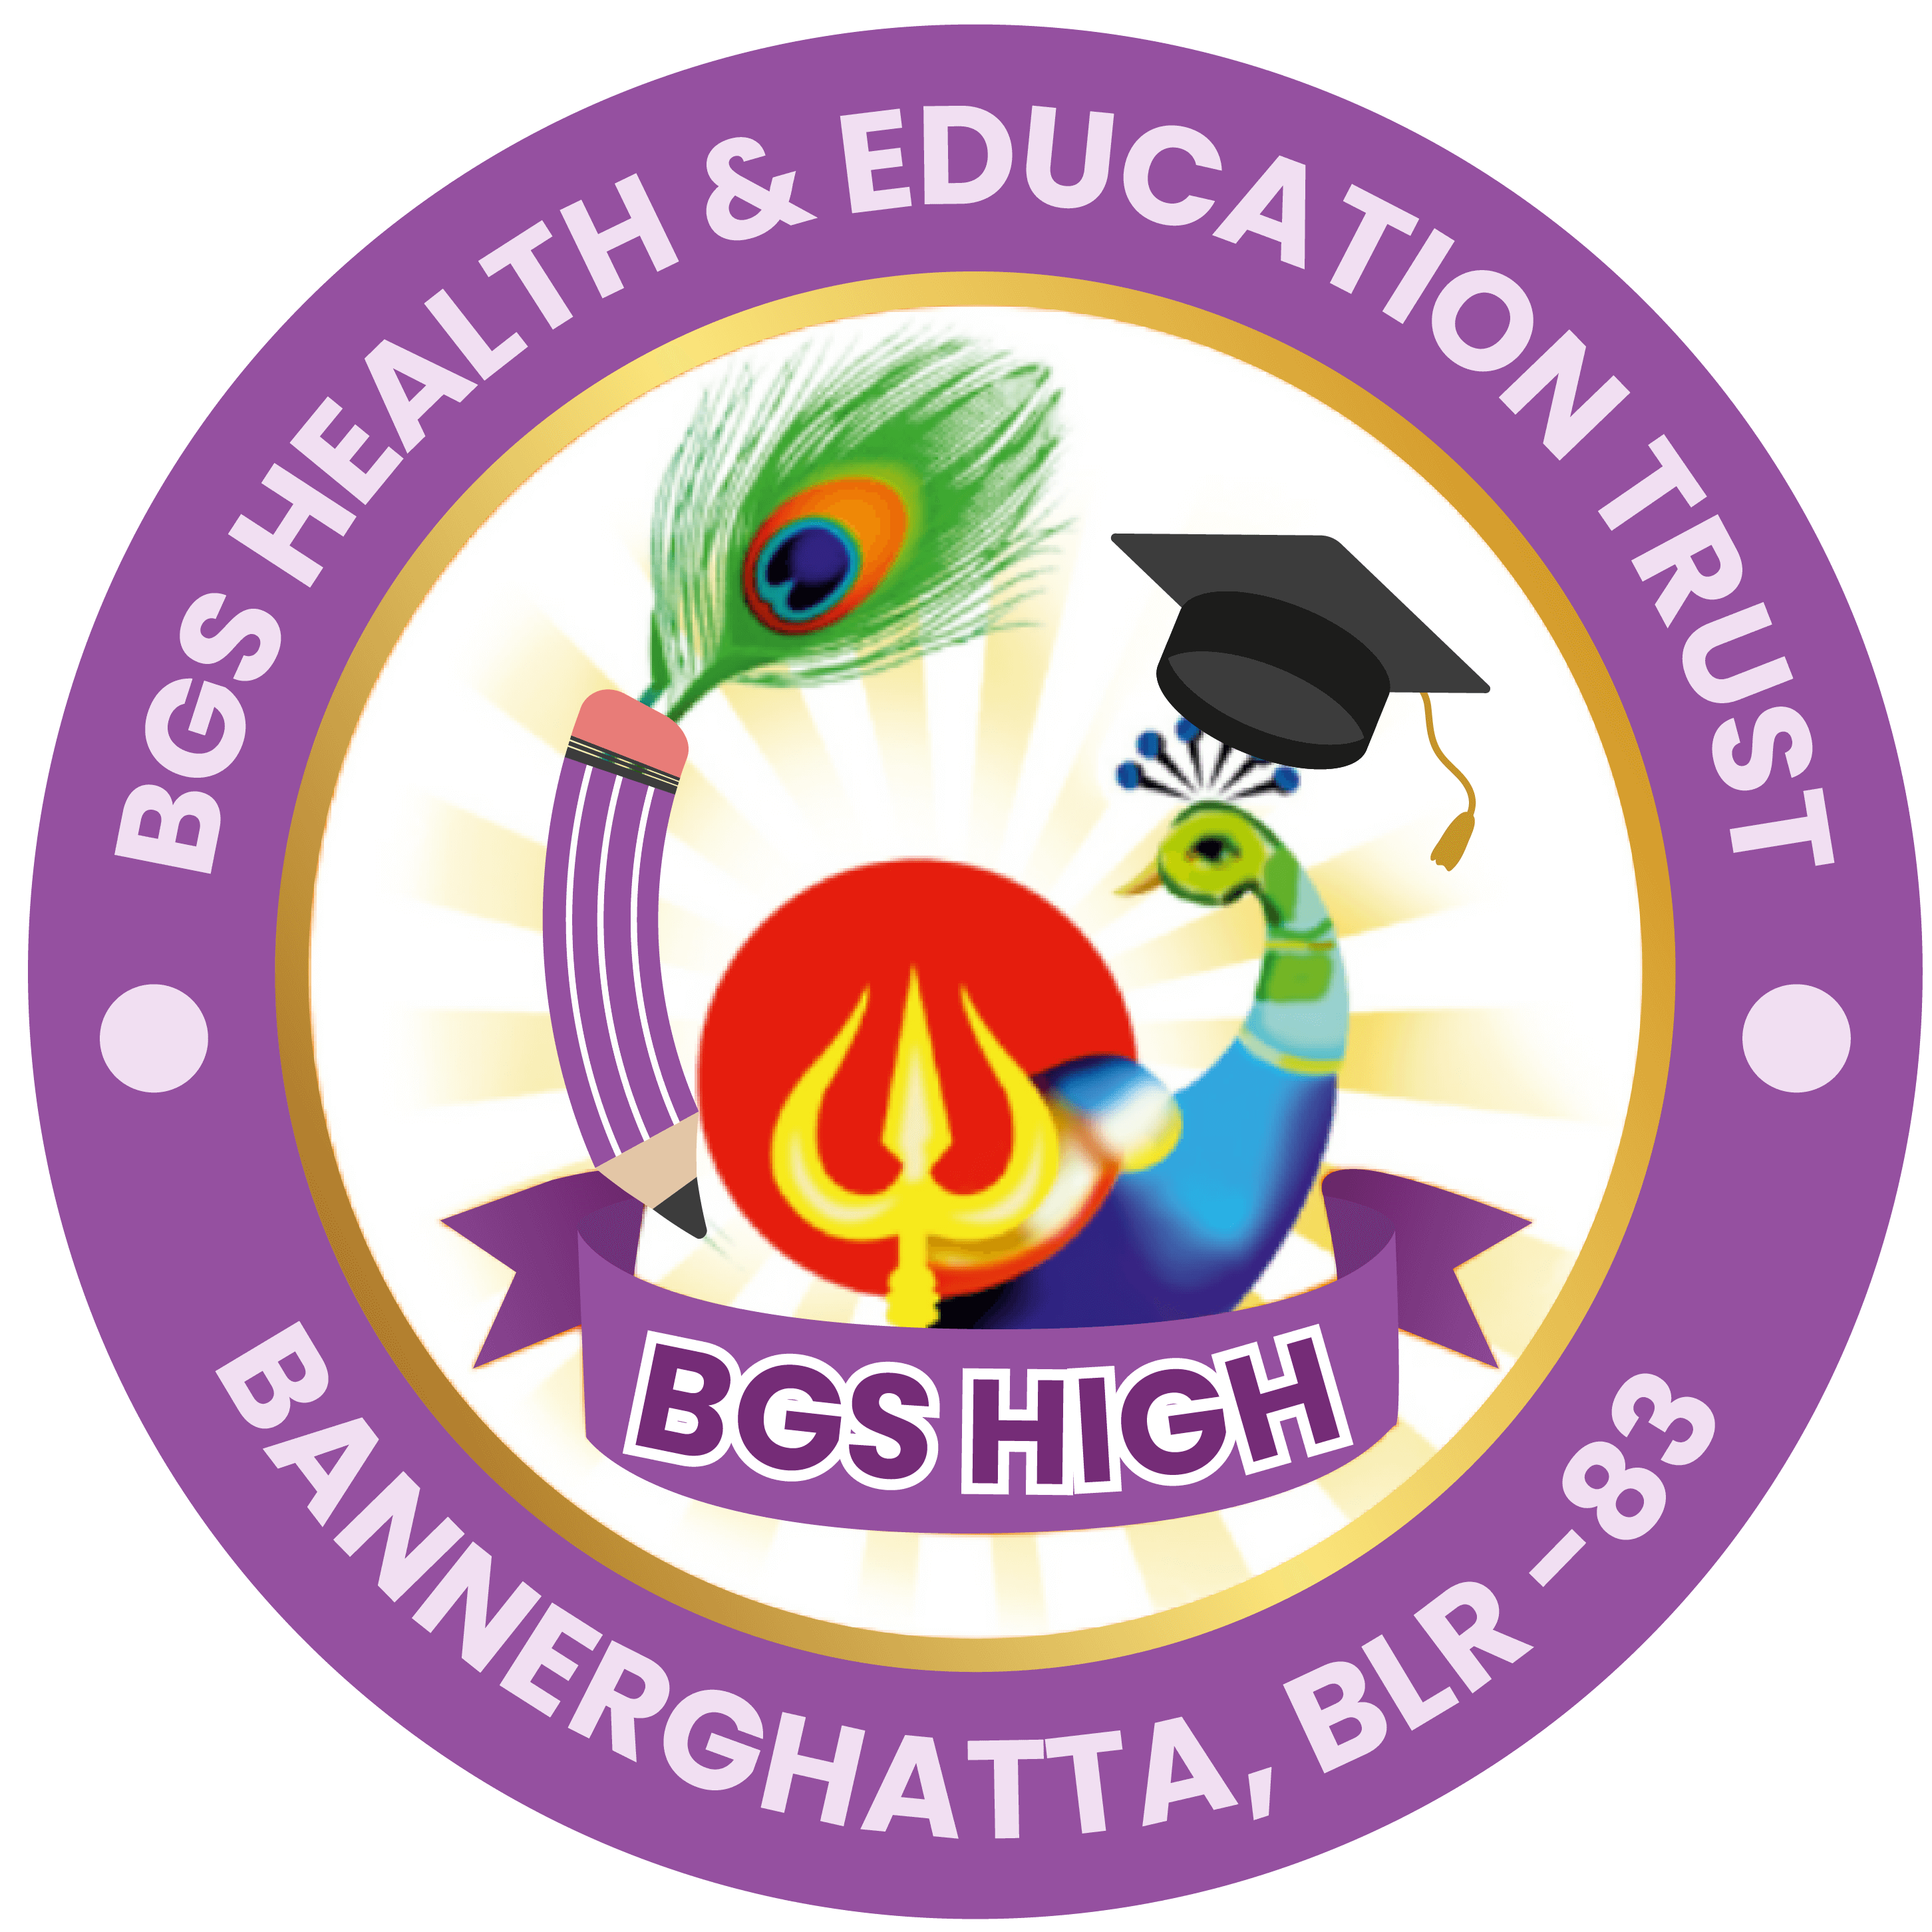 BGS HIGH Cambridge International school